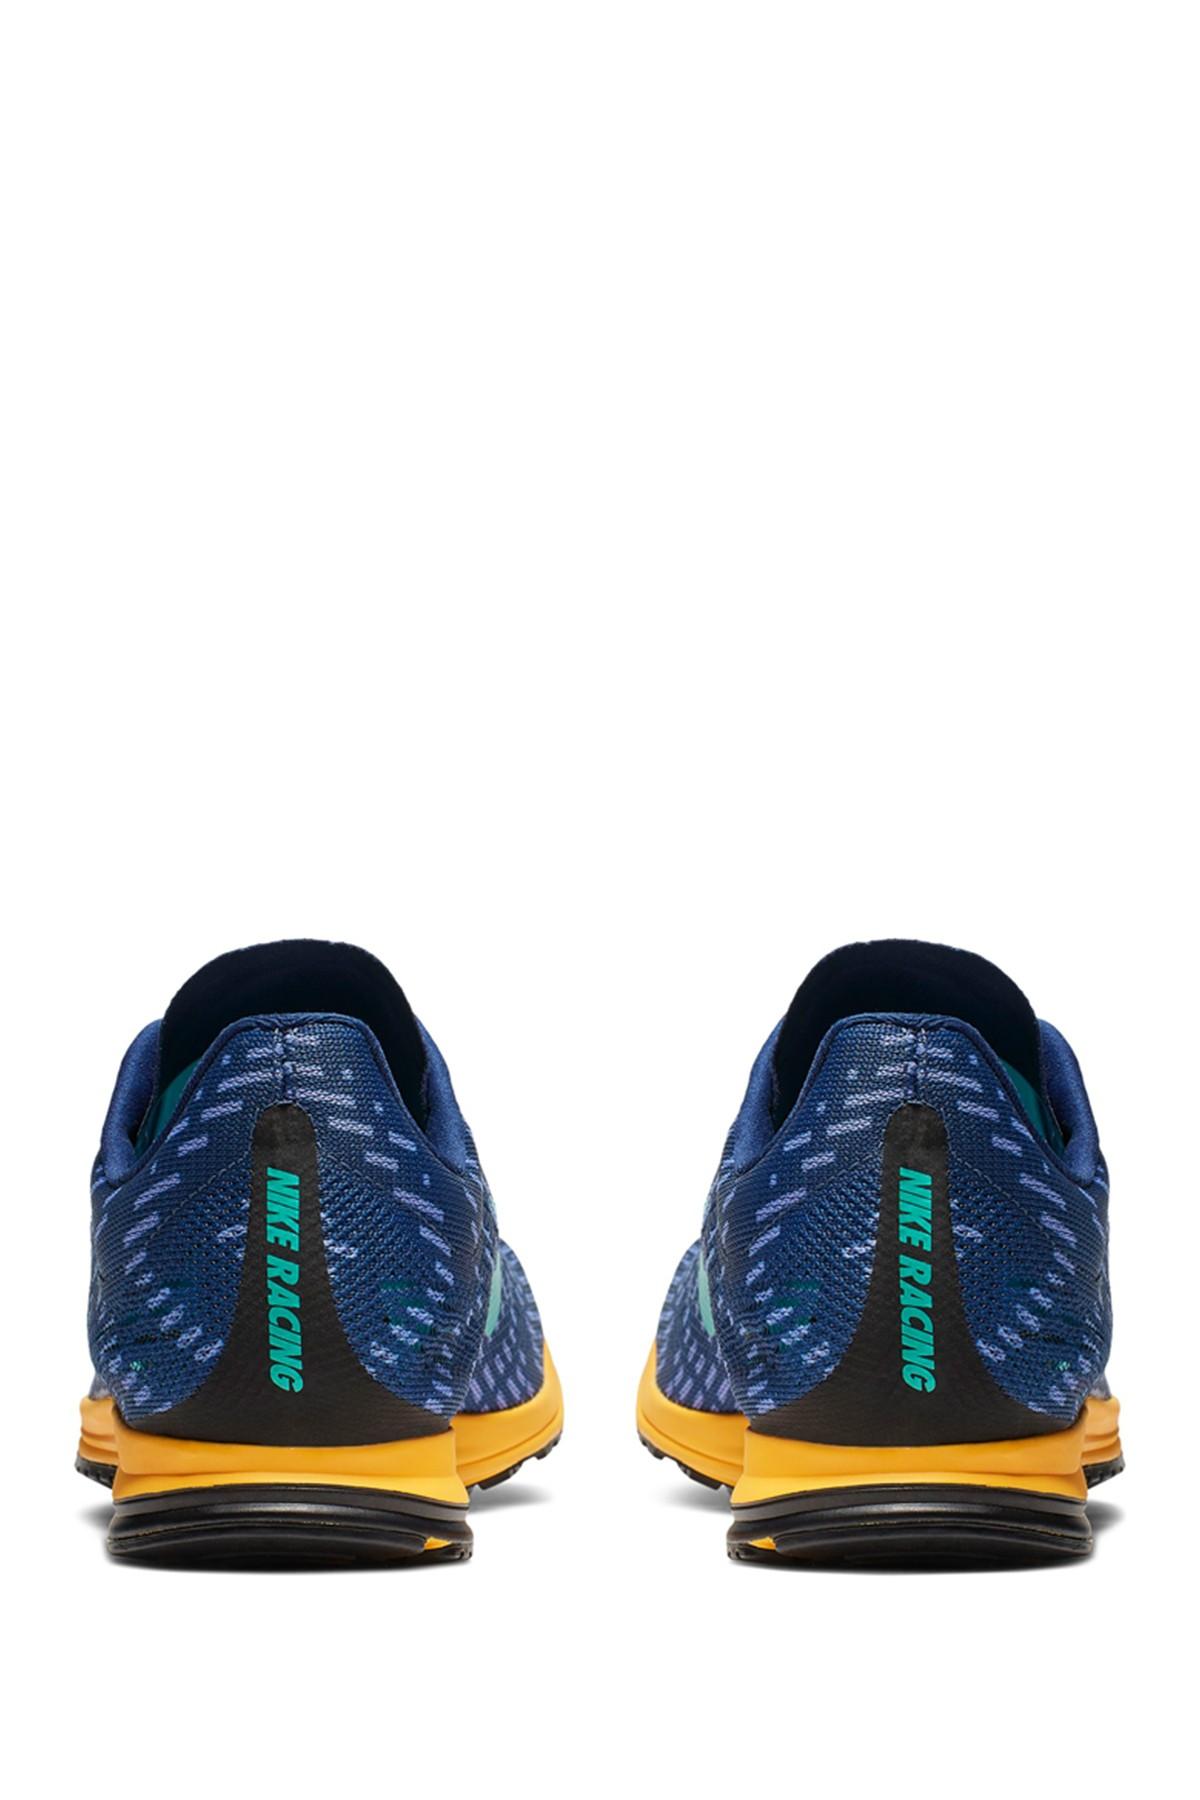 Nike Unisex Zoom Streak Lt 4 Racing Shoe Availability: $89.95 in for Men |